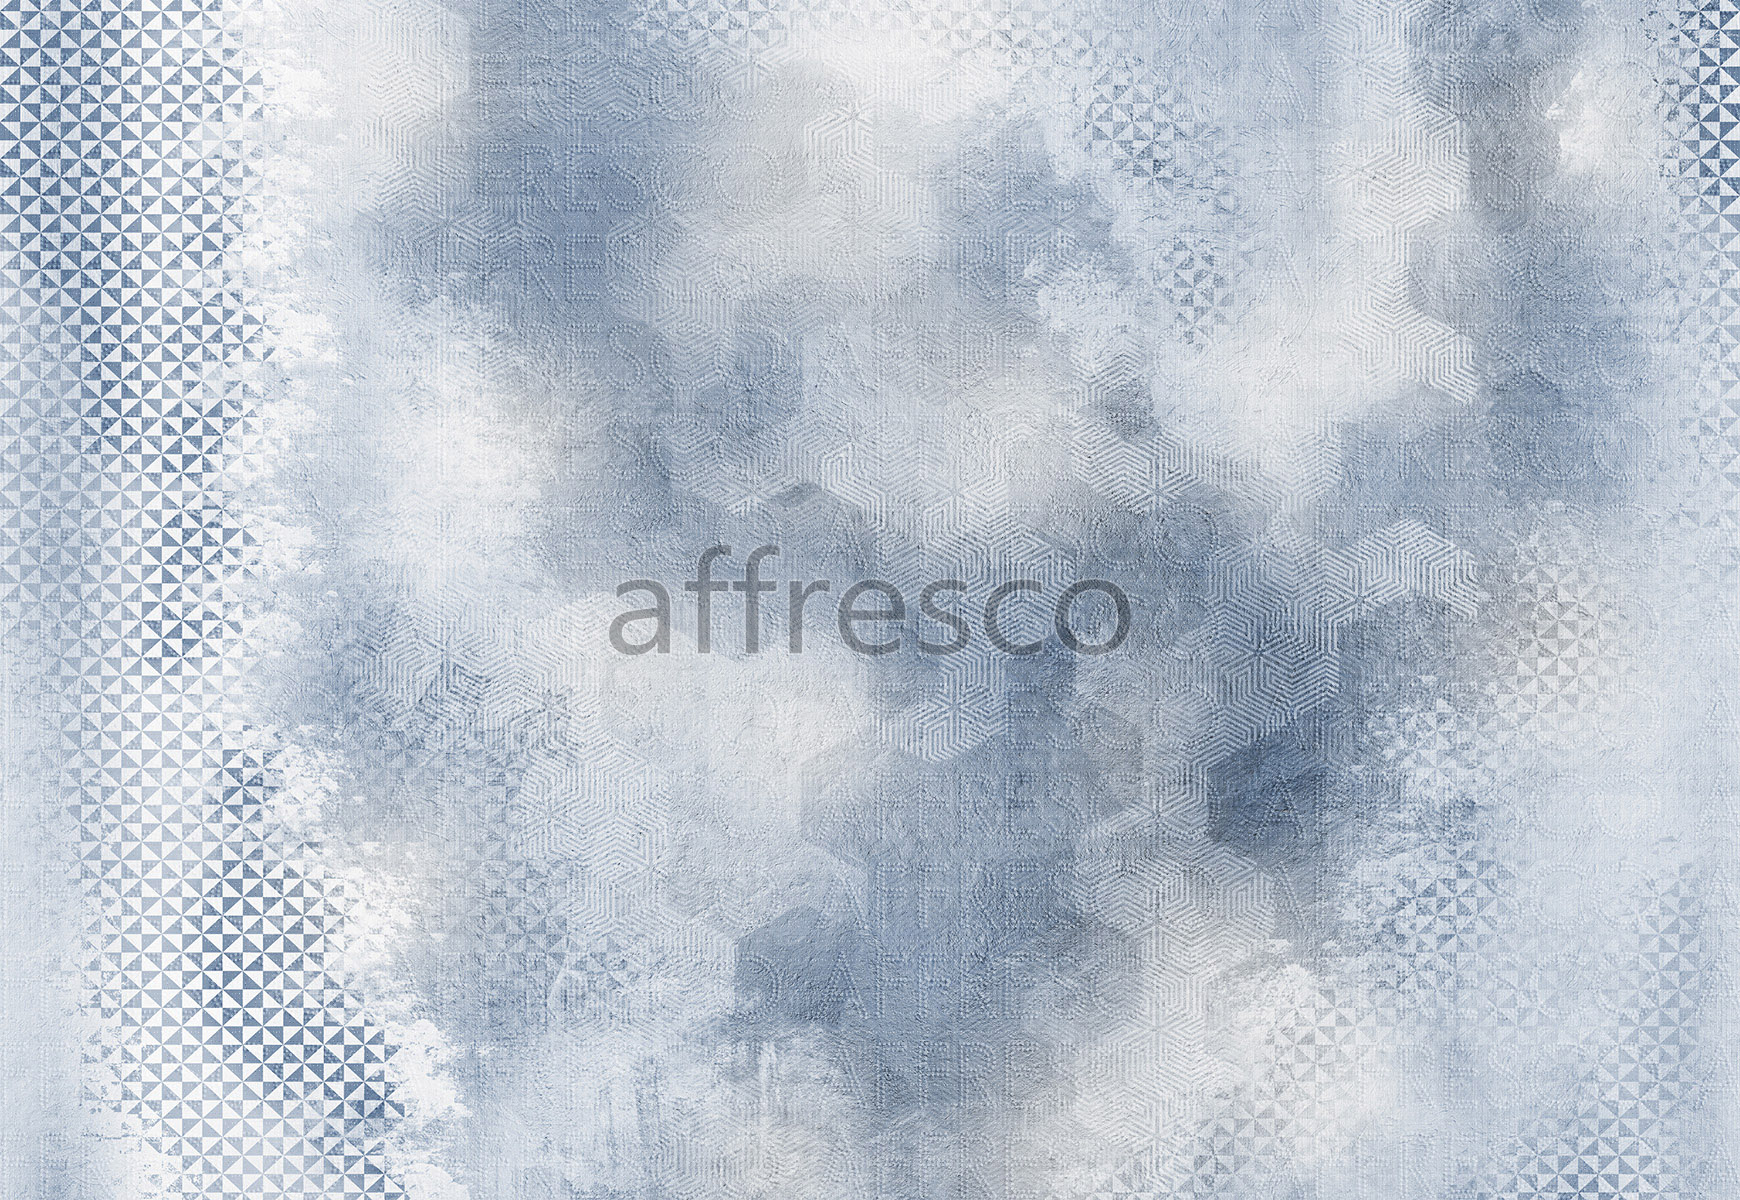 ID135853 | Textures | Извилистые линии | Affresco Factory